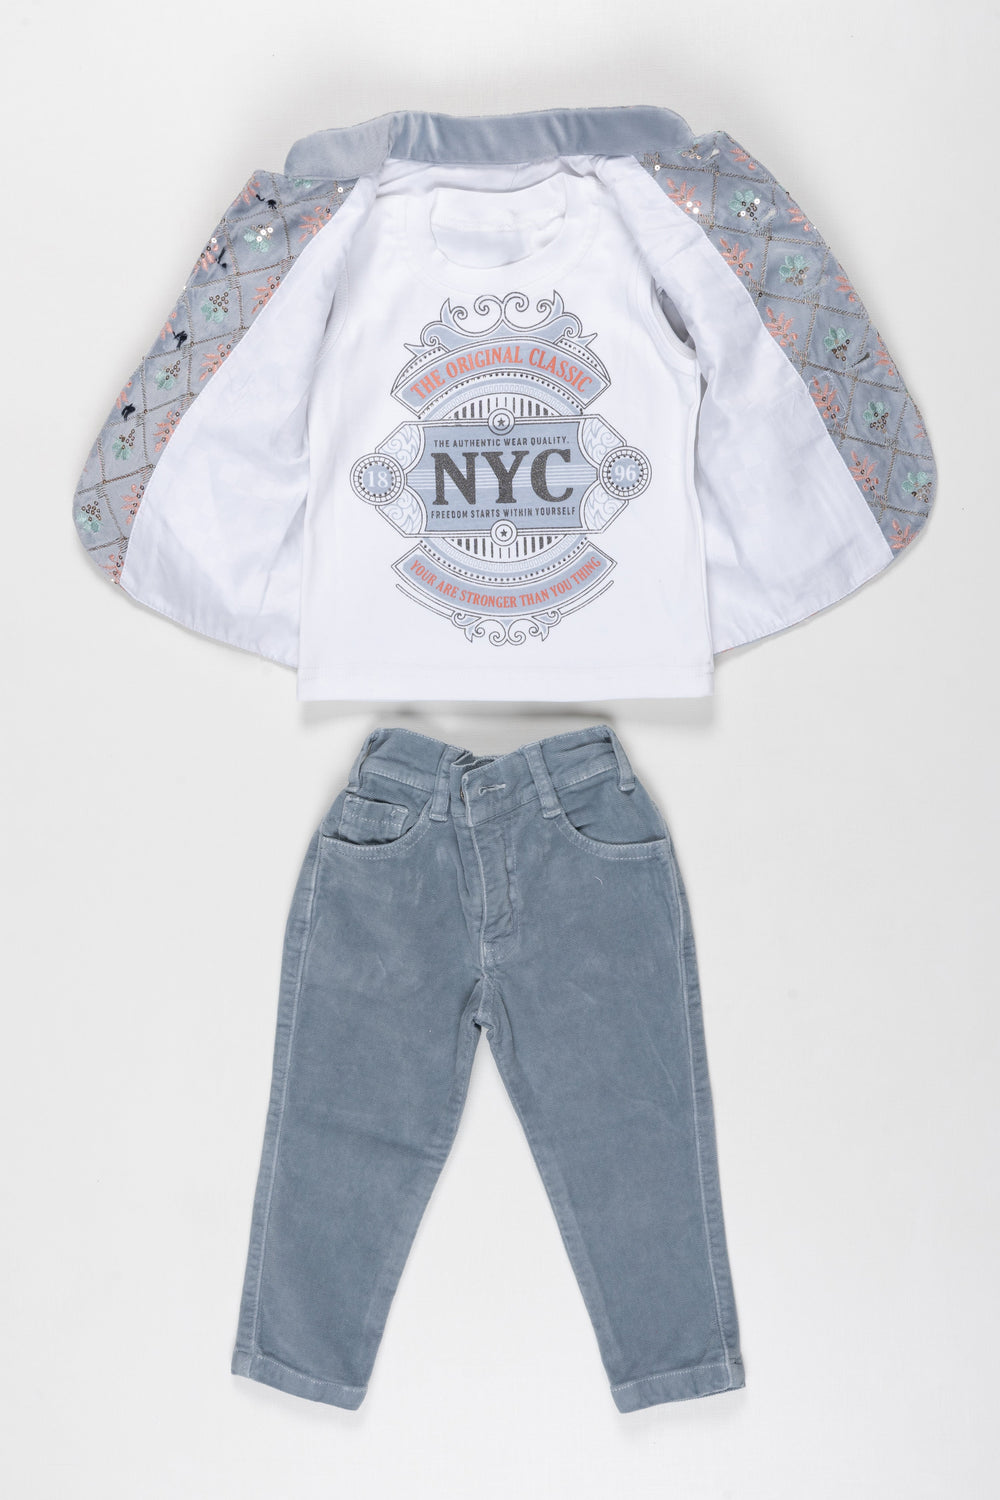 The Nesavu Boys Kurtha Set Trendy Boys Winter Jacket and Jeans Combo with Graphic Tee Nesavu Shop Boys Winter Jacket  Jeans Set | Cool Graphic Tee Outfit | The Nesavu